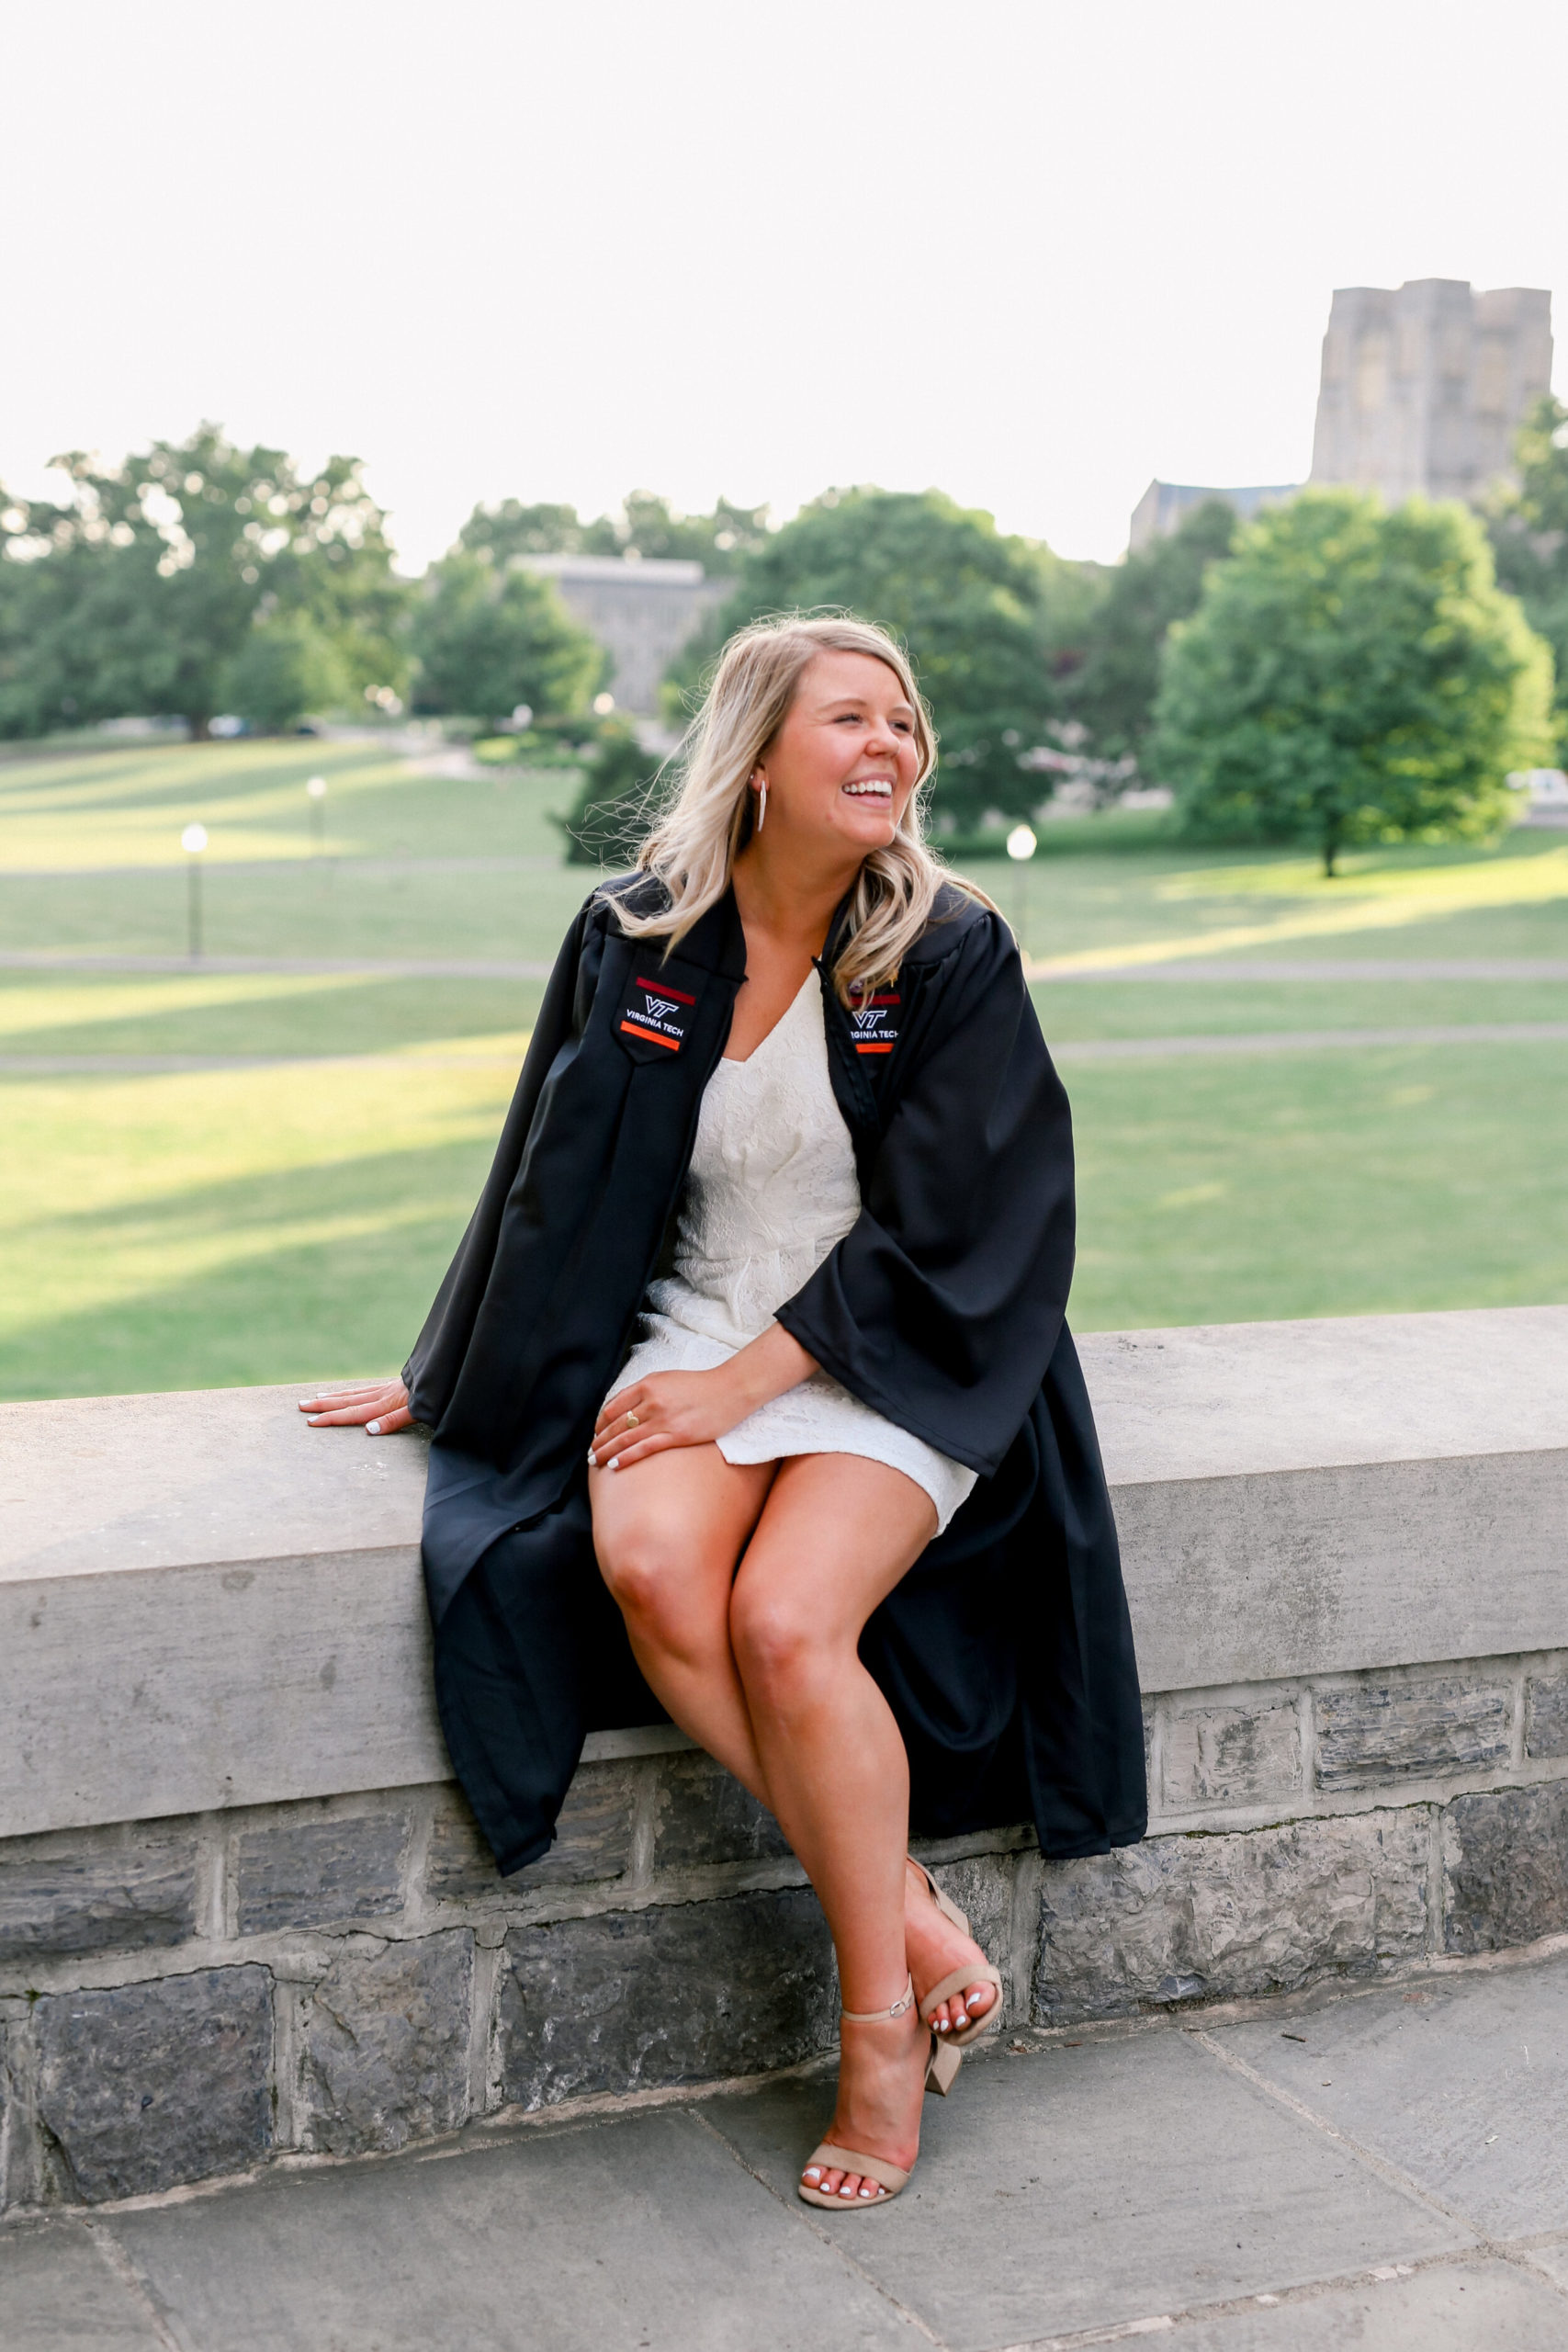 Senior graduation pictures for a Virginia Tech graduate.